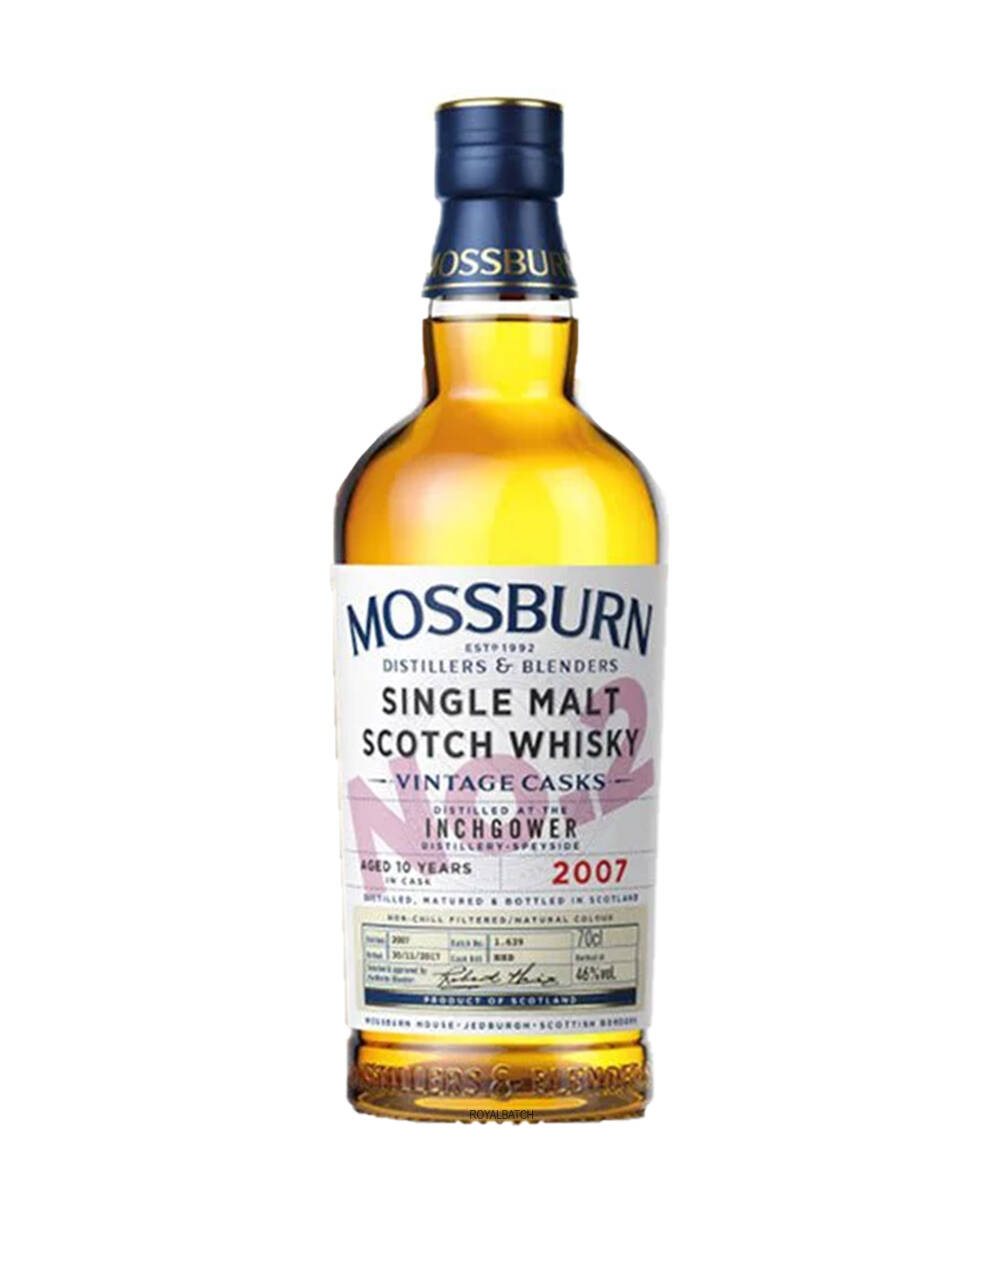 Mossburn Vintage Casks 10 Year Old Inchgower #2 Single Malt Scotch Whisky